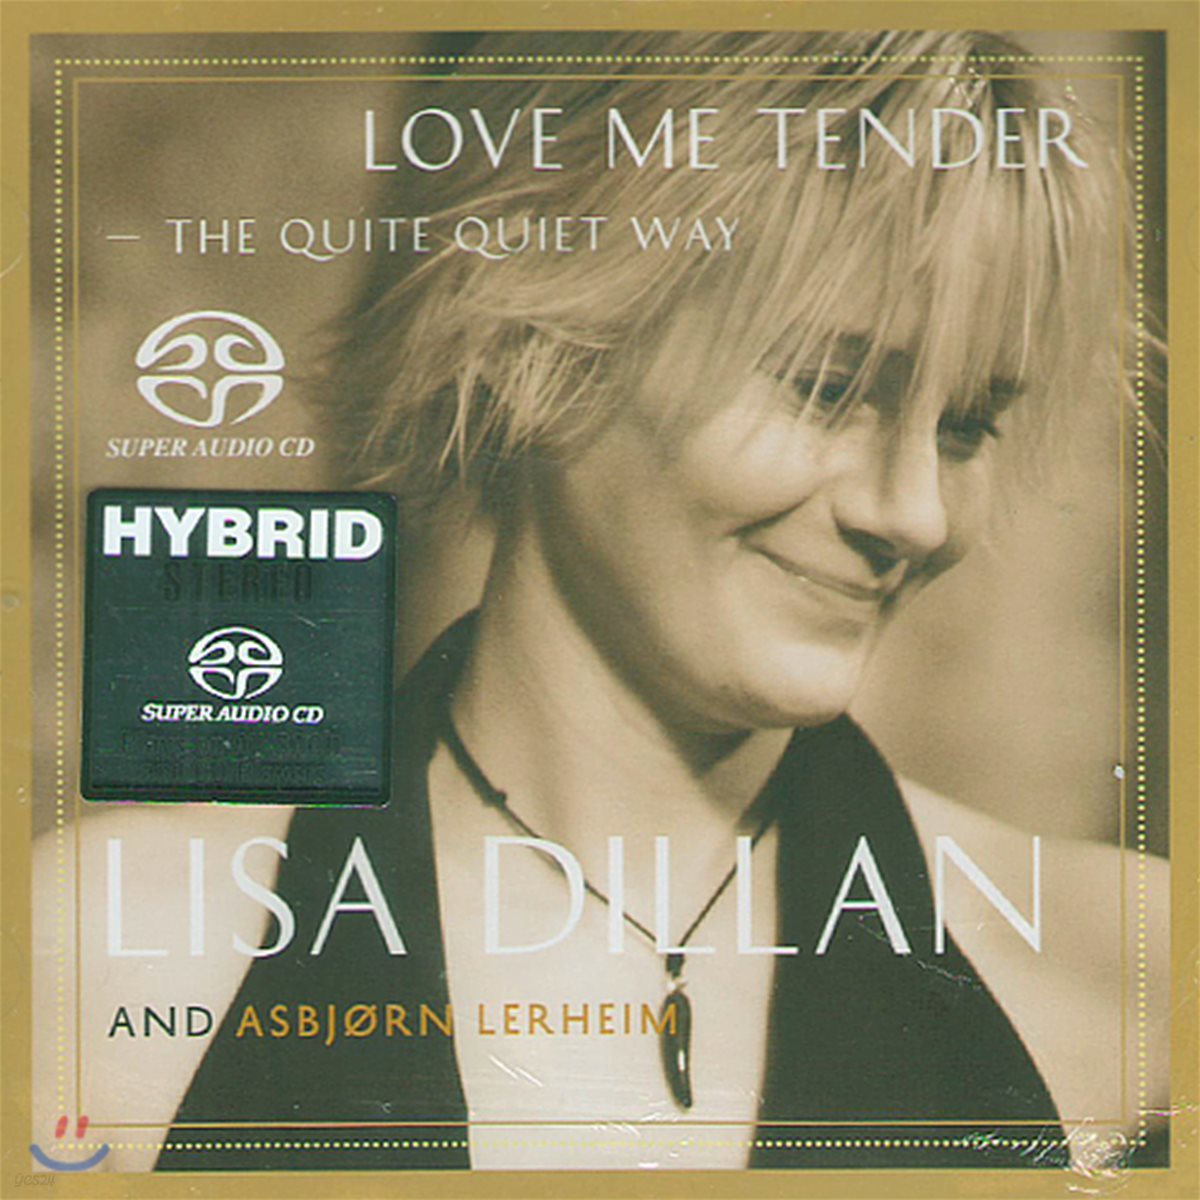 Lisa Dillan / Asbjorn Lerheim (리사 딜란) - Love Me Tender: The Quite Quiet Way 